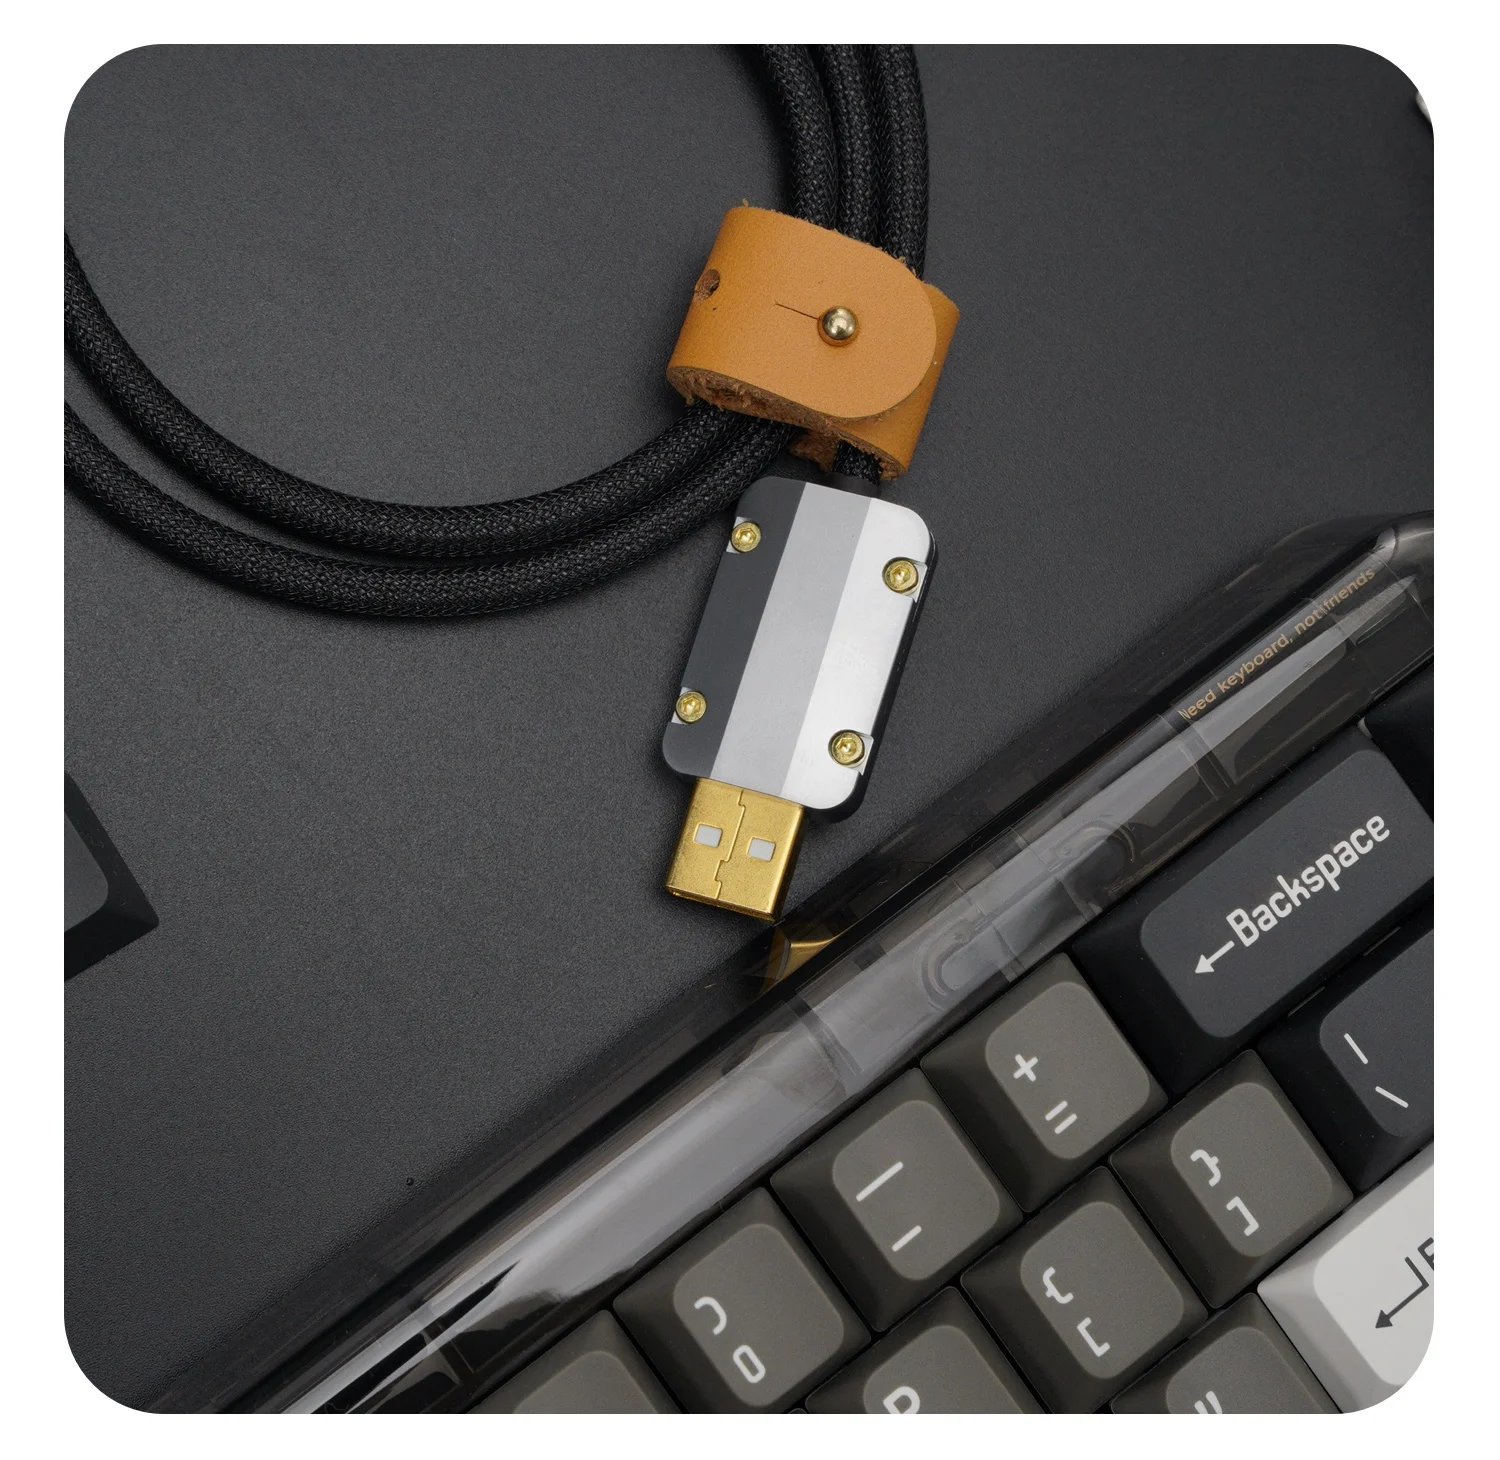 GeekCable tastatura cablu de date MelGeek Mojo68 stralucire retro gri negru din spate Imagine 5